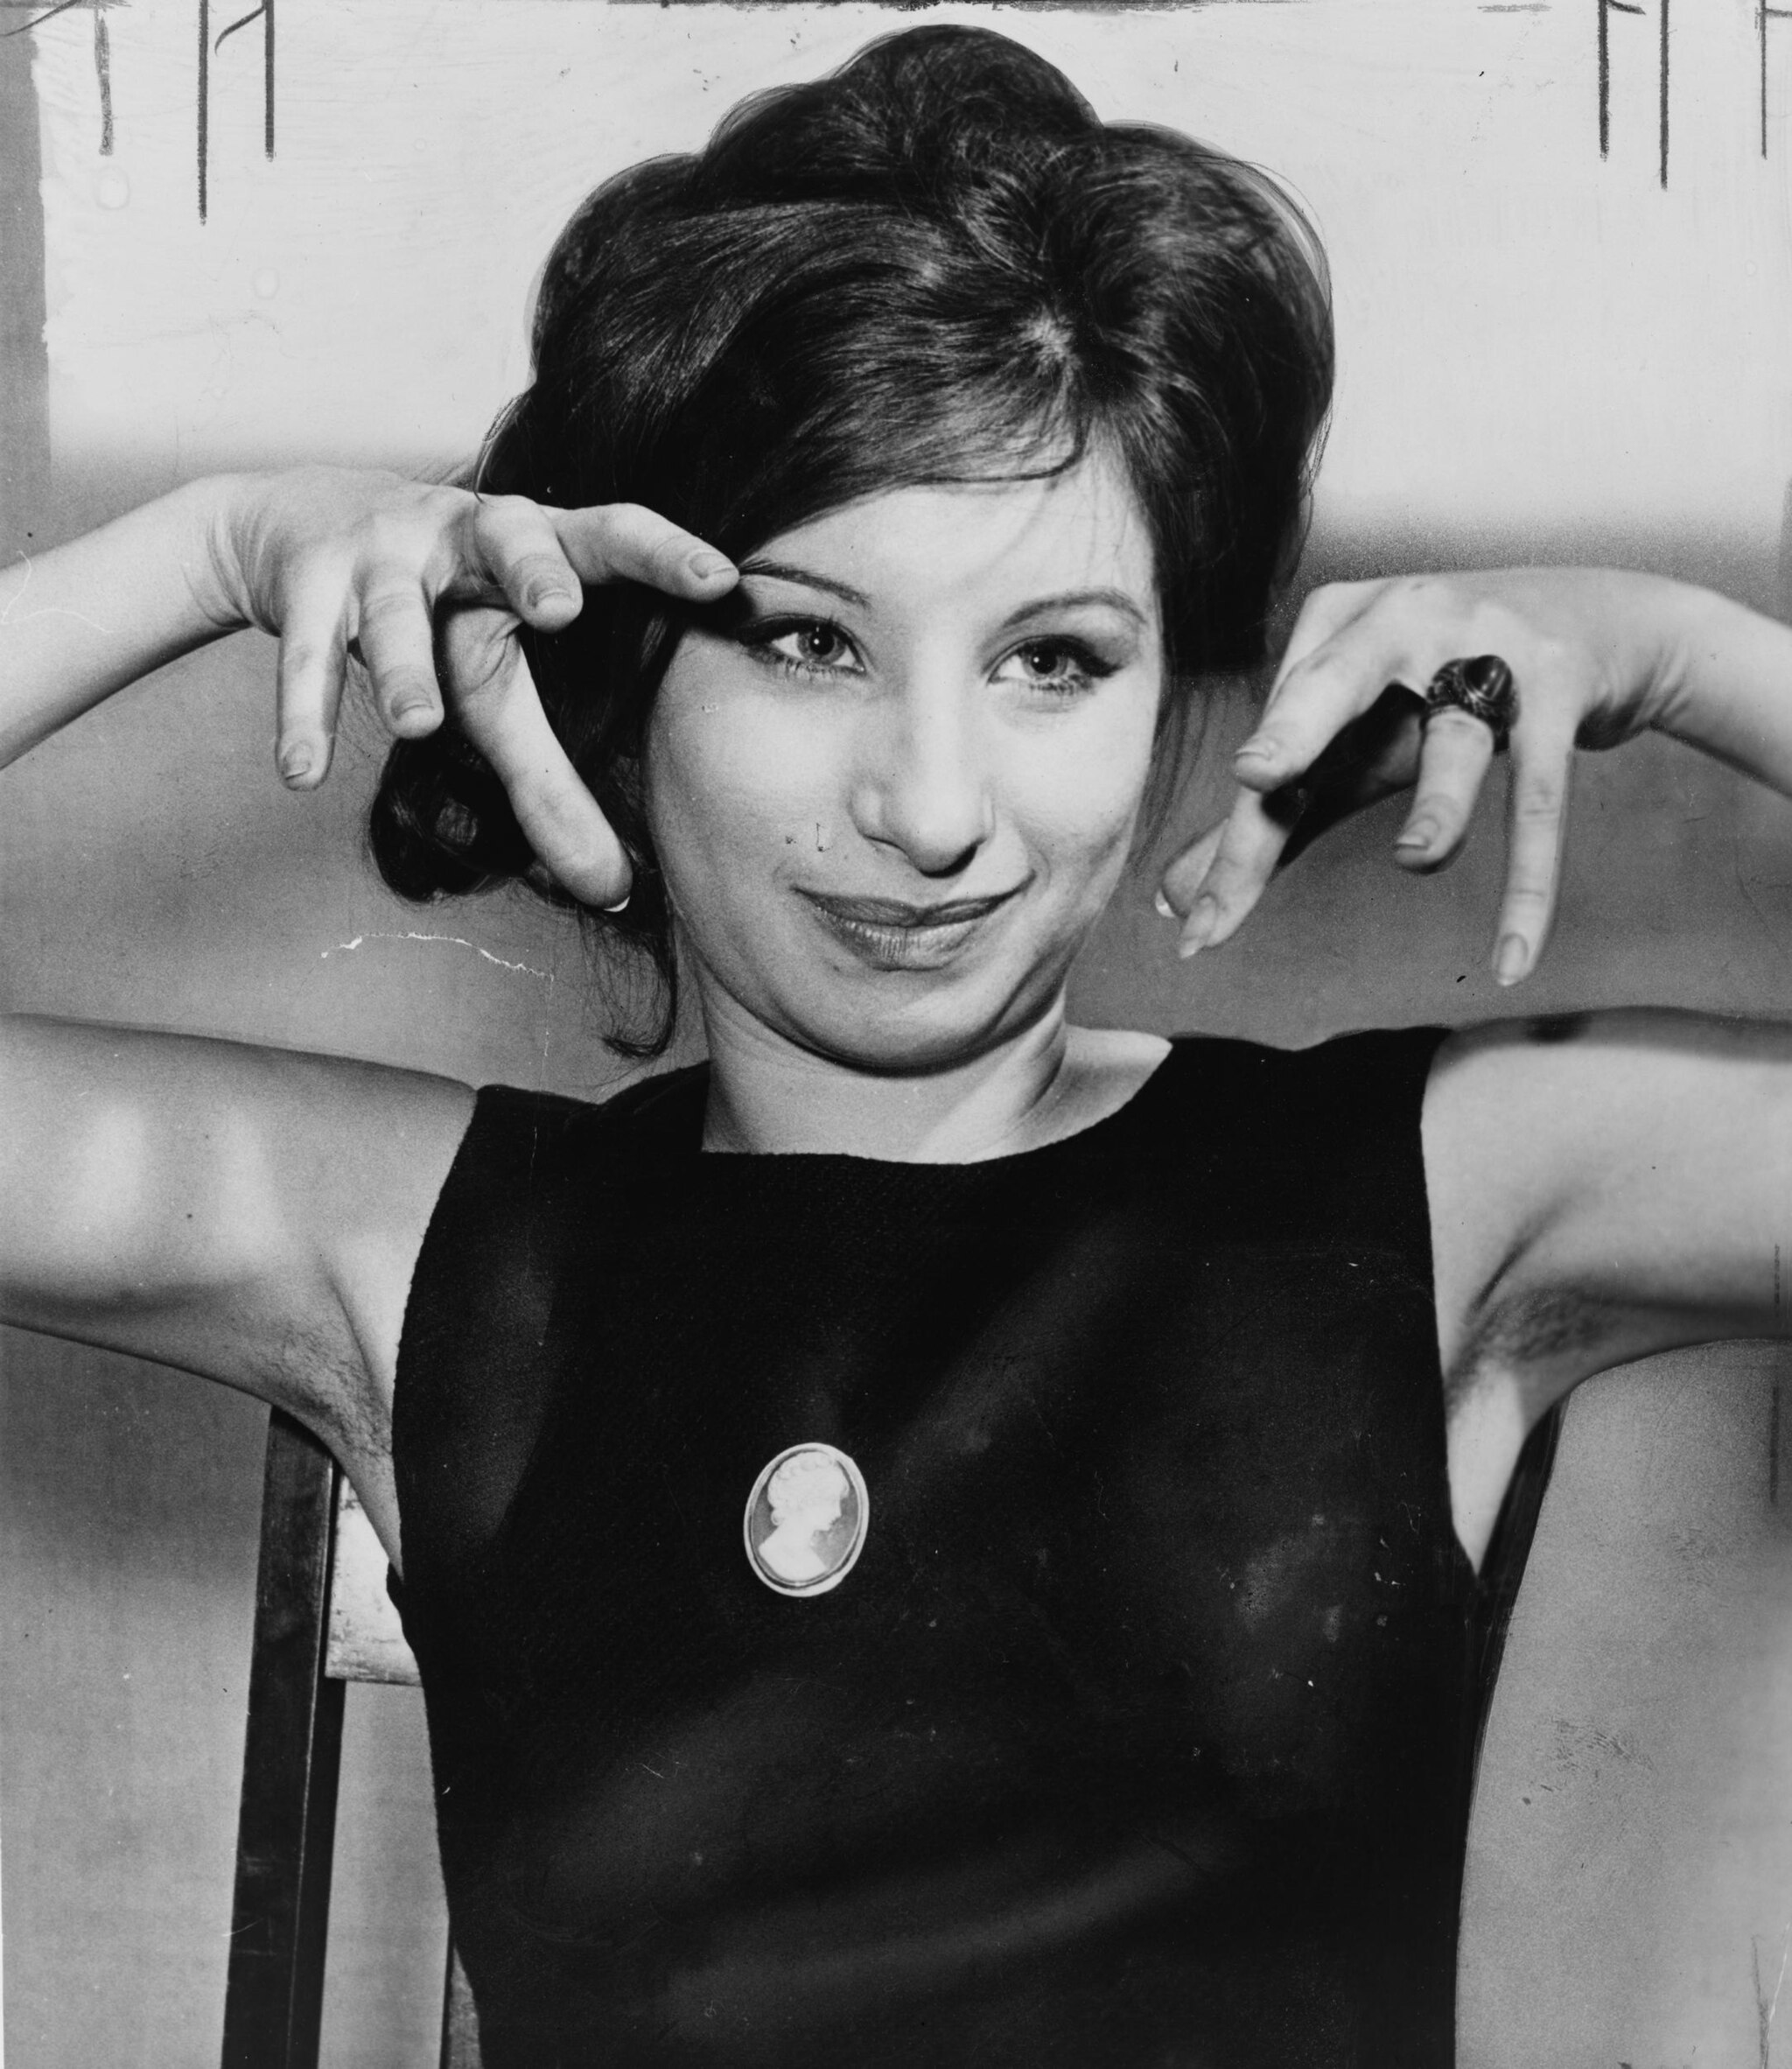 La actriz Barbra Streisand en 1962. Foto: Al Ravenna/ Library of Congress - Public domain.